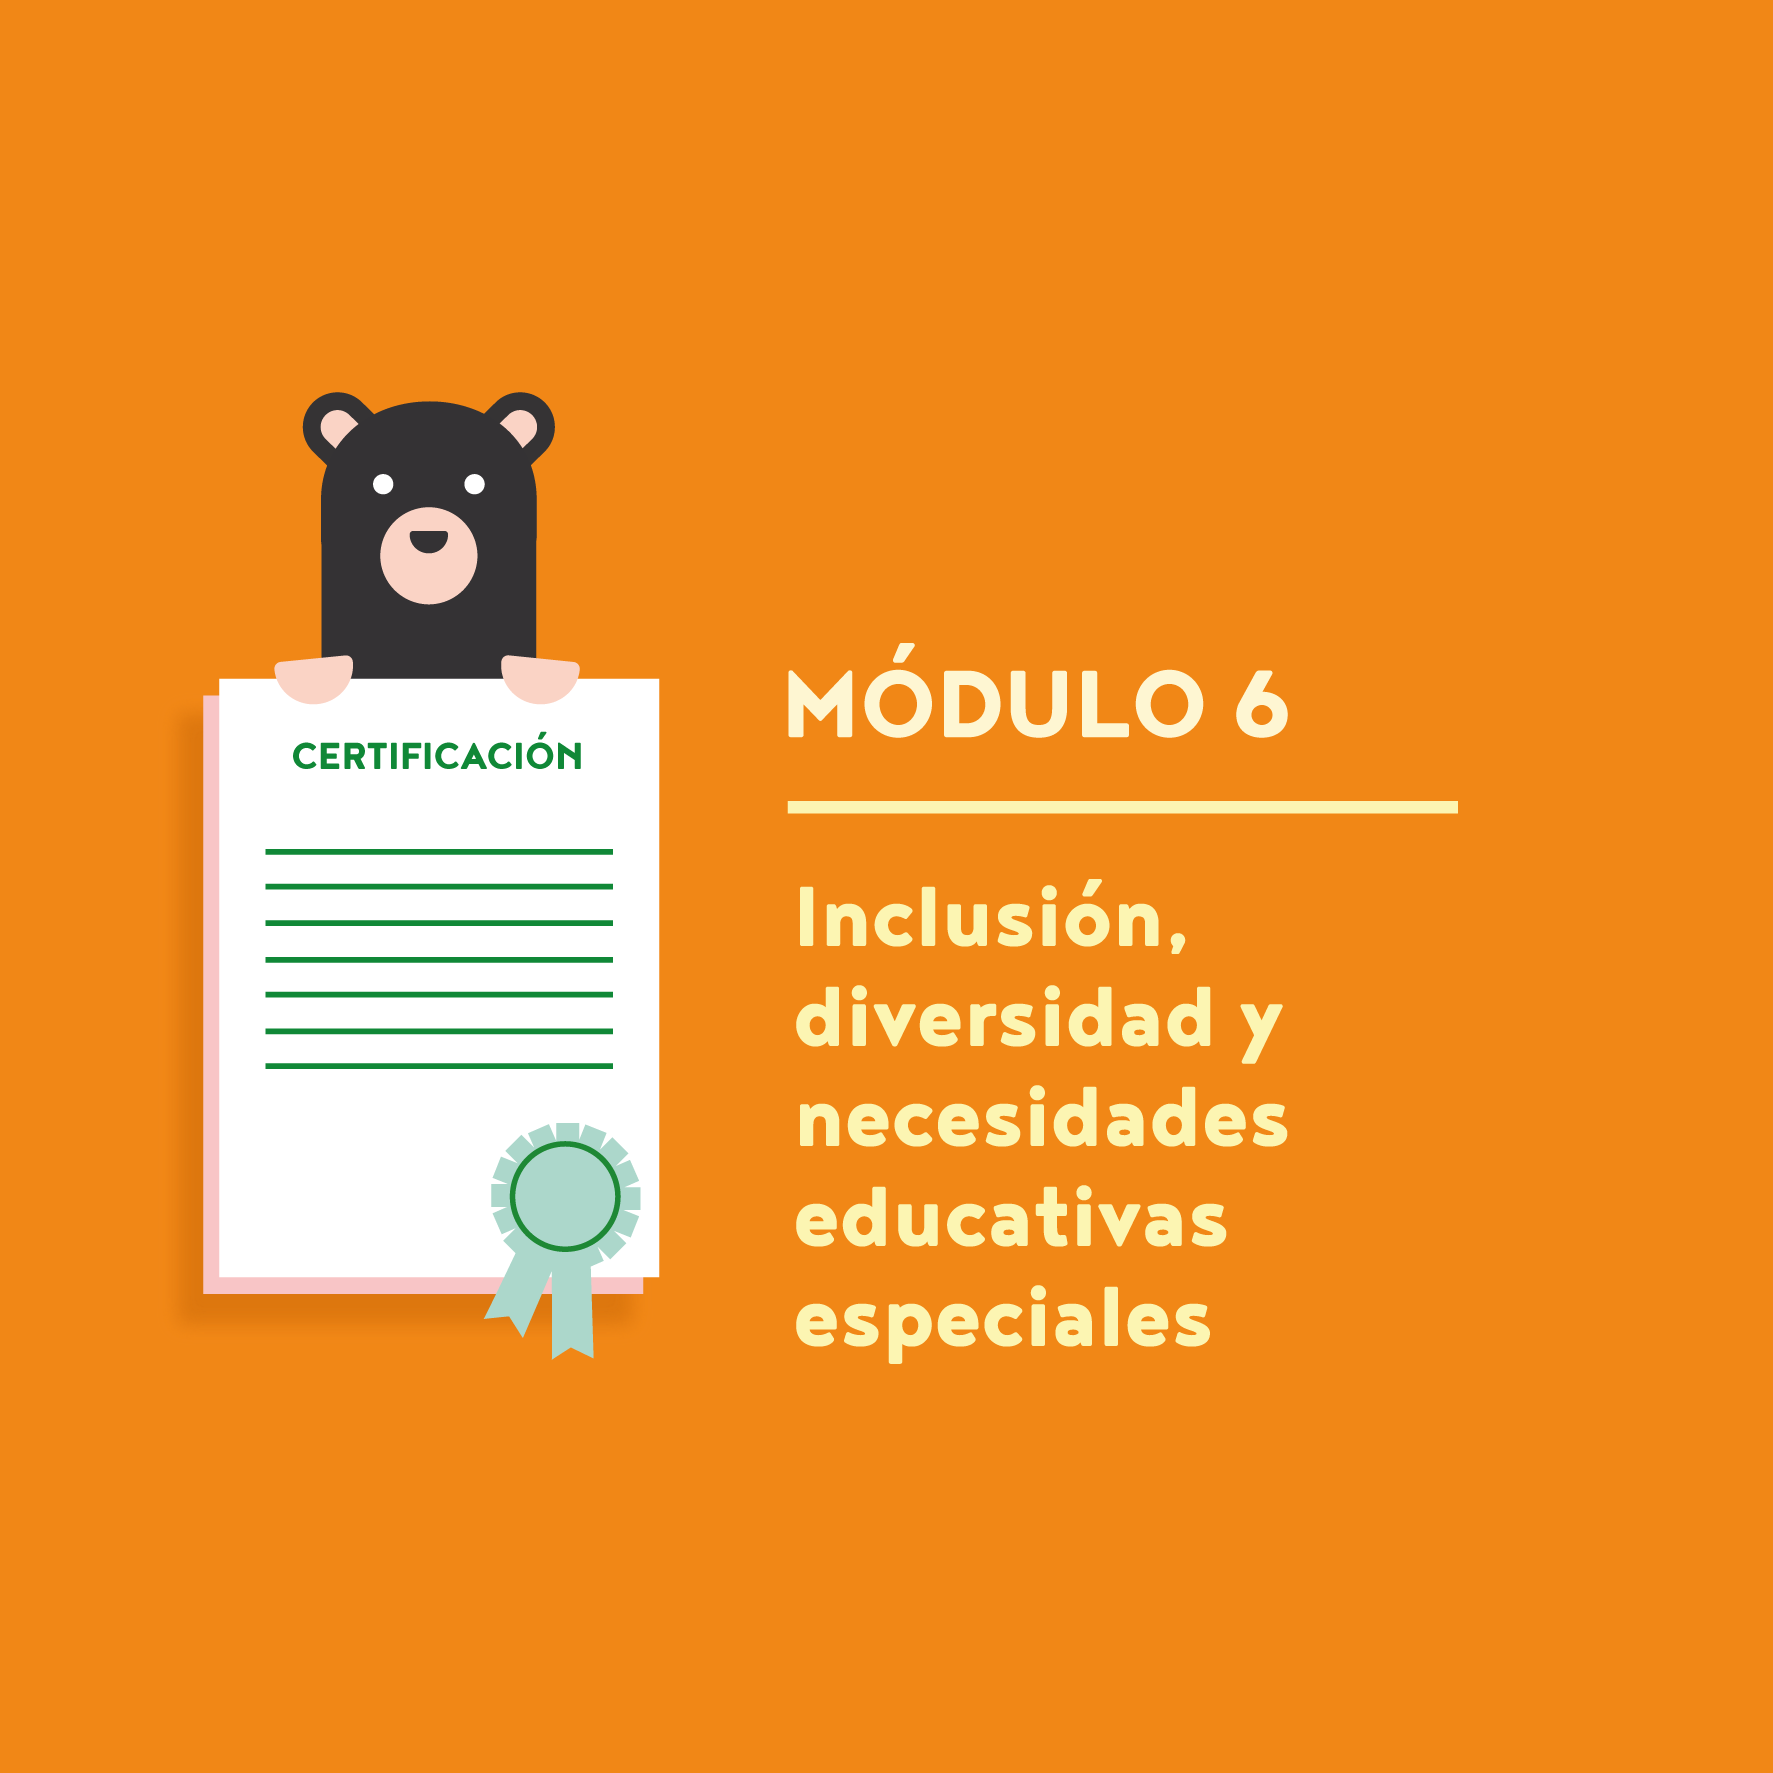 Spanish diploma modules marketing 6-1